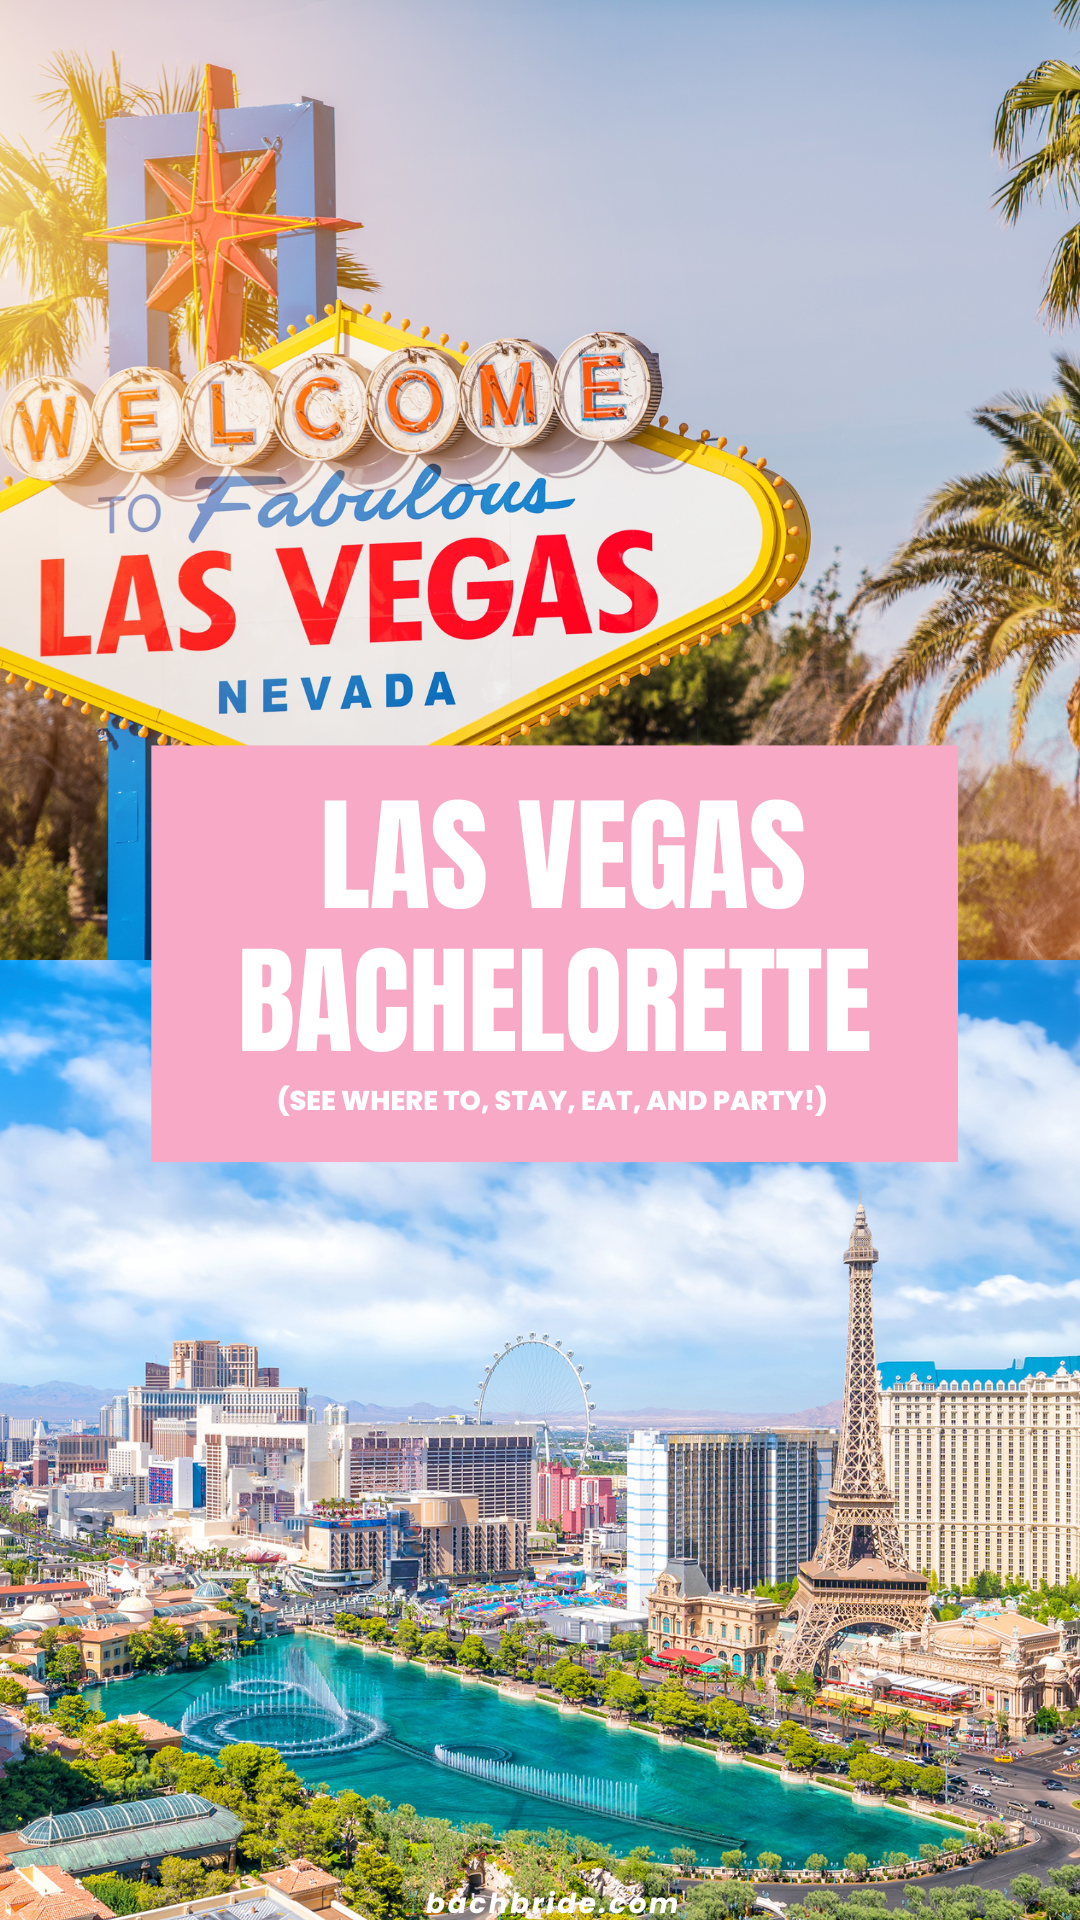 Best Bachelor Party Resorts in Las Vegas